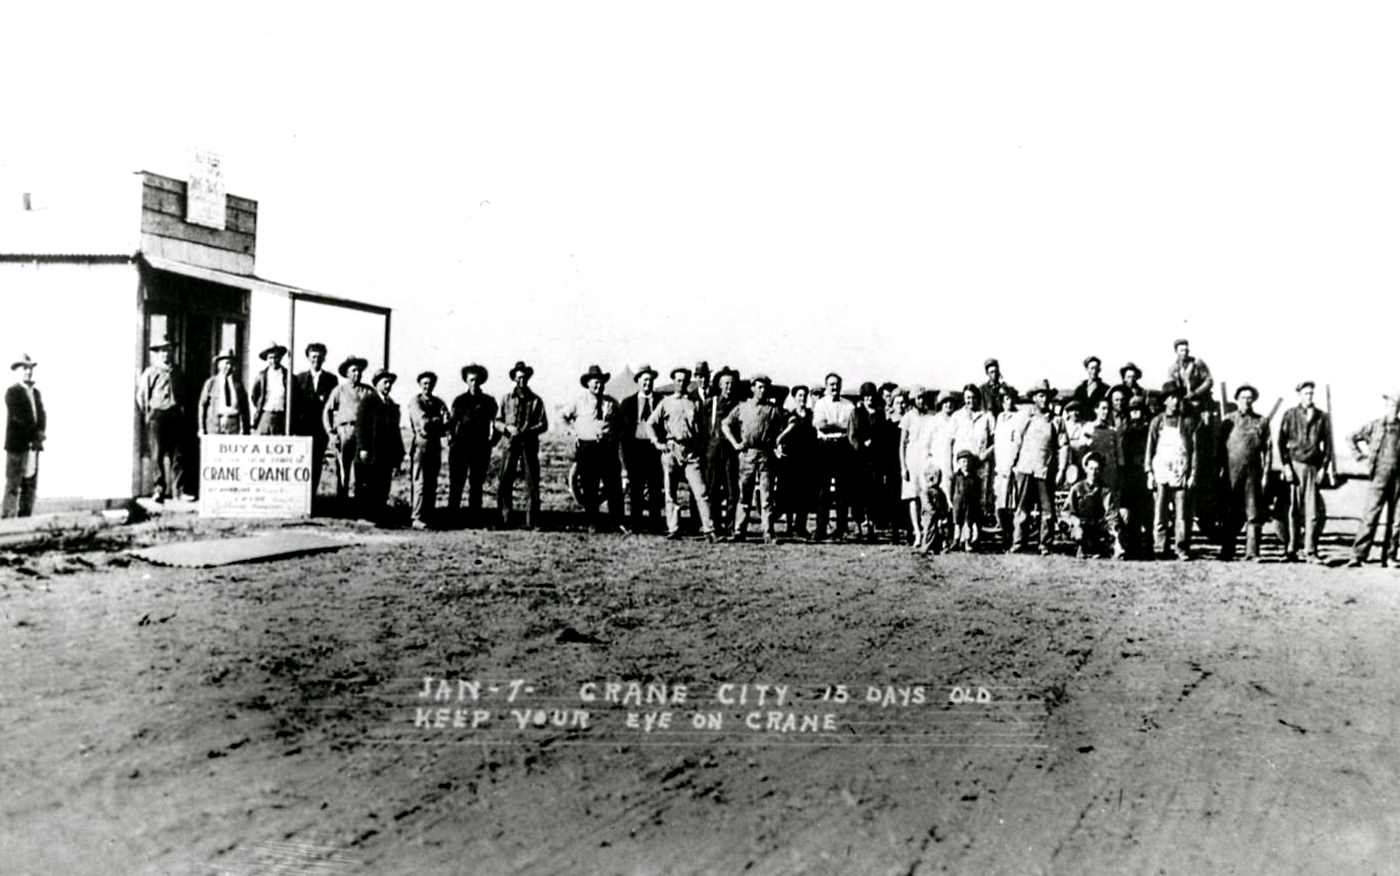 Crane City Citizens on January 7, 1927